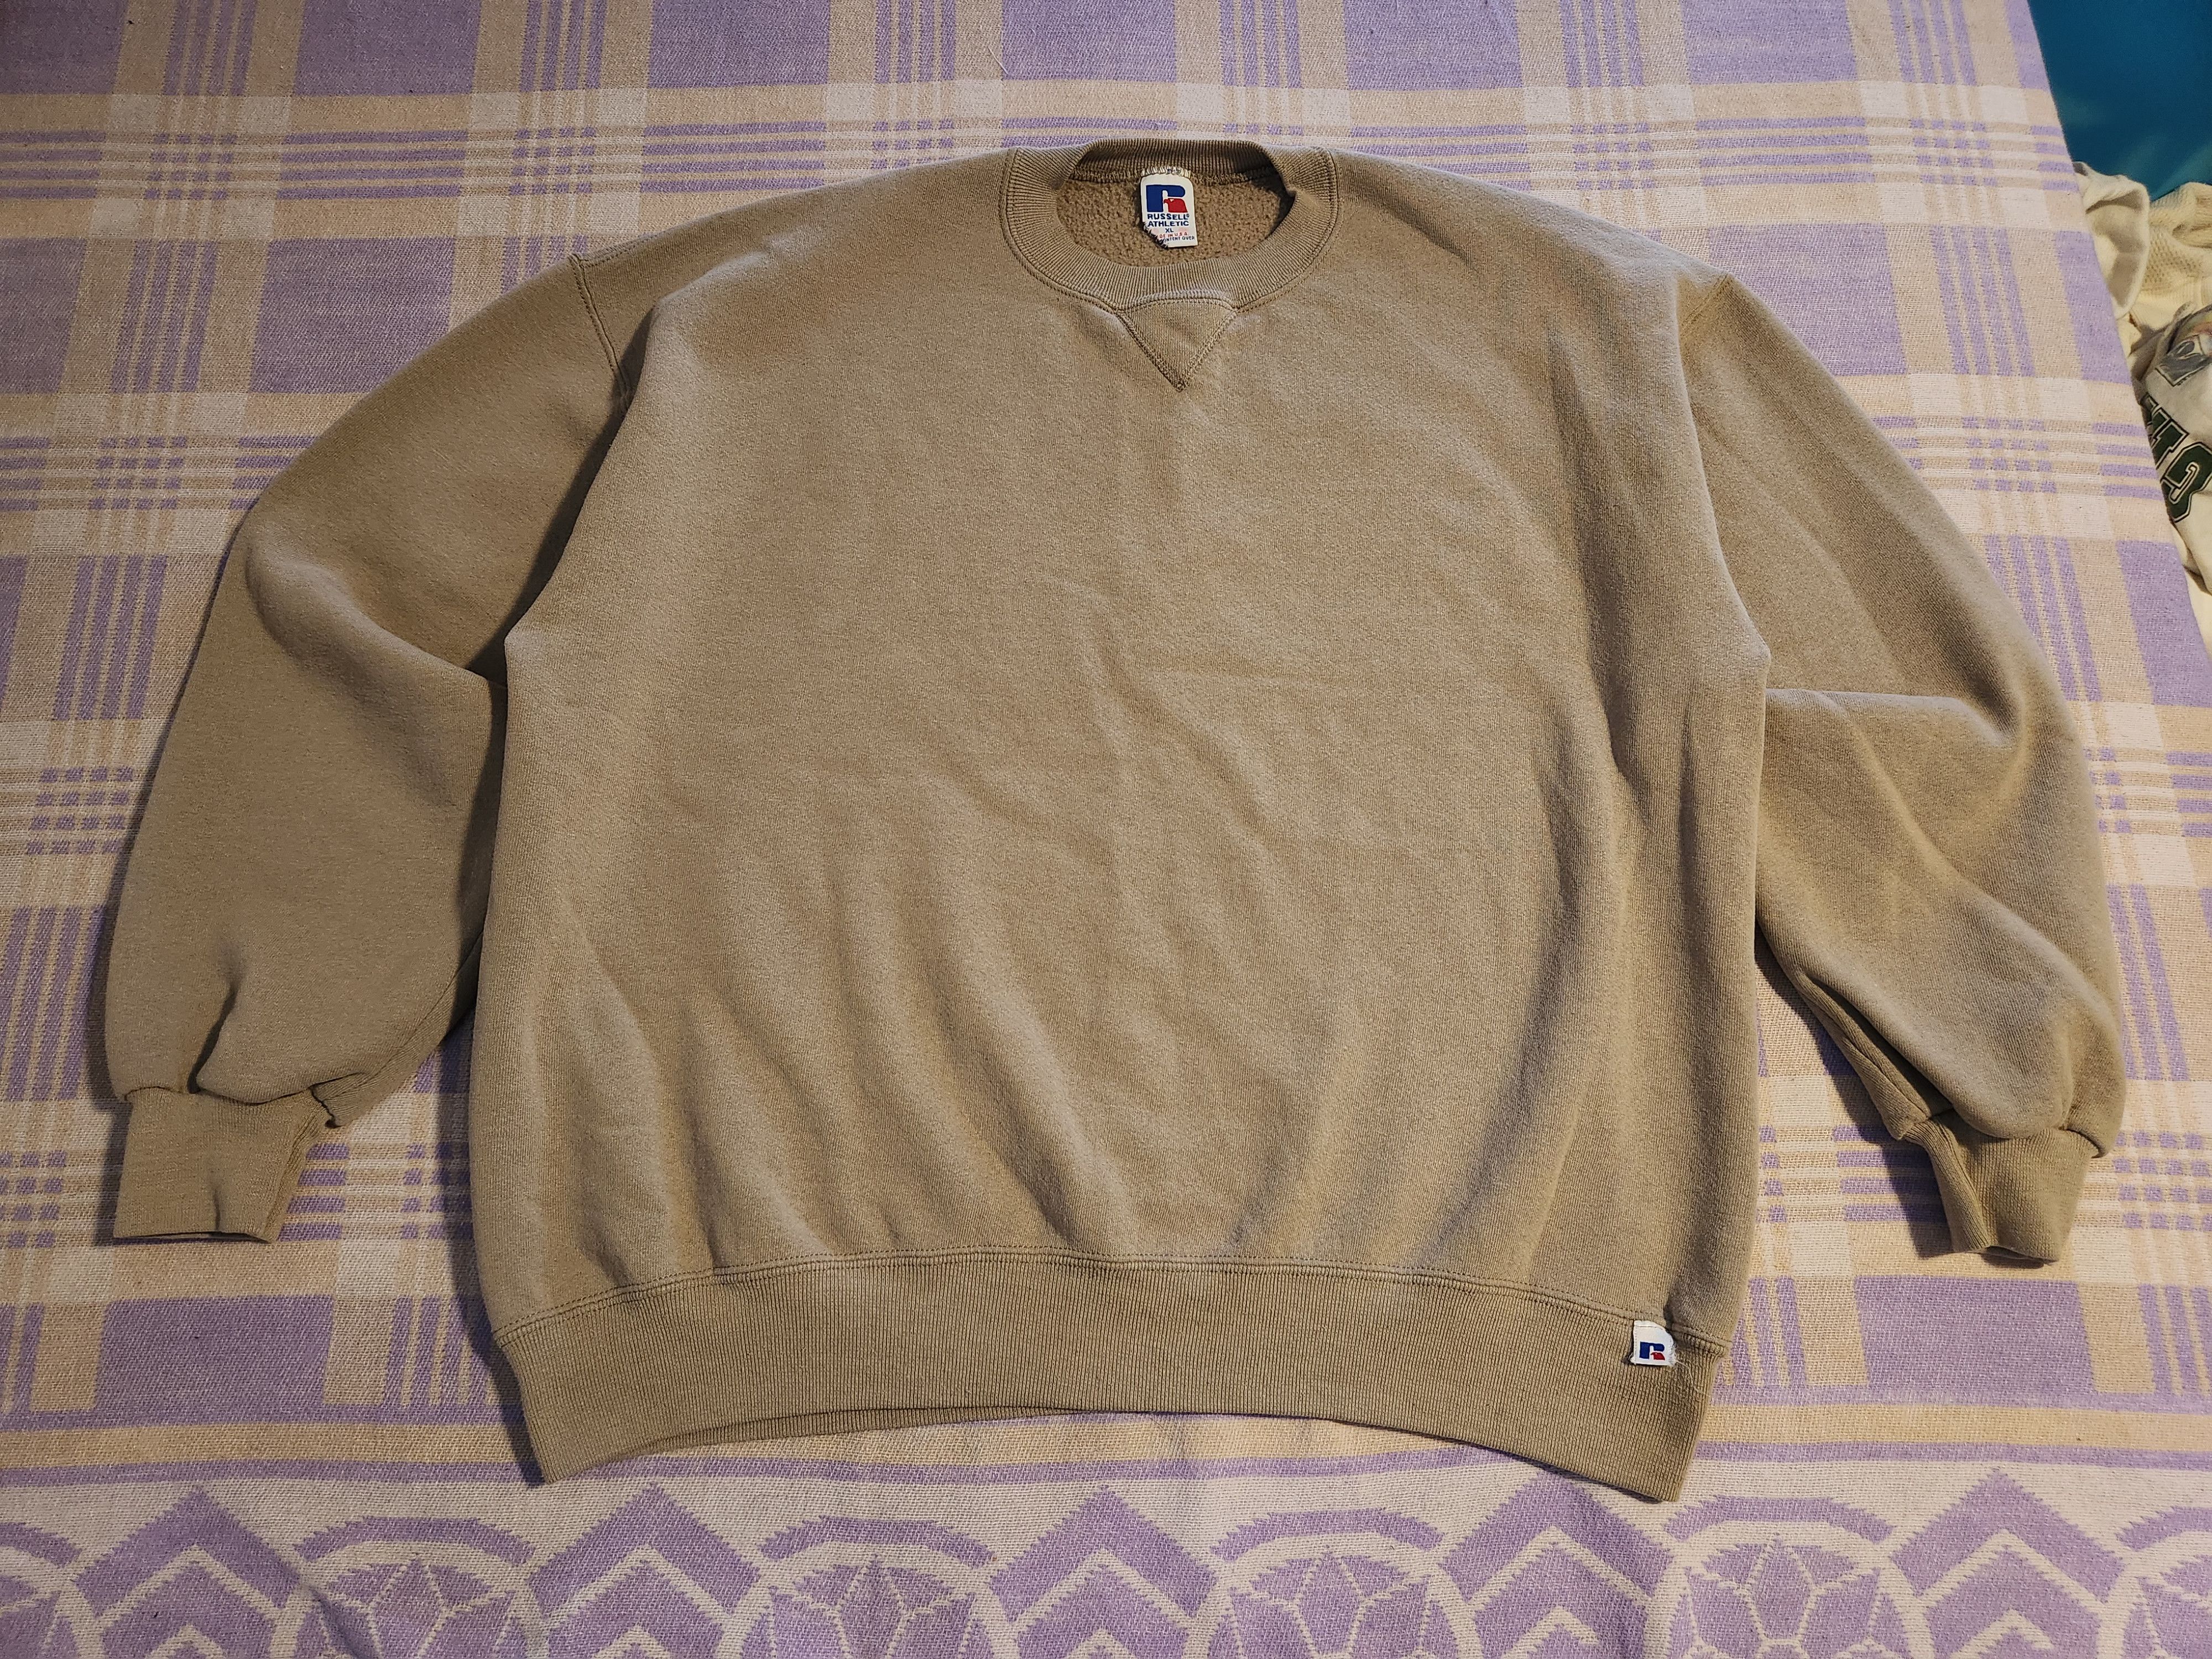 Vintage Vintage Russell sweatshirt crewneck tan brown Rare 90s usa